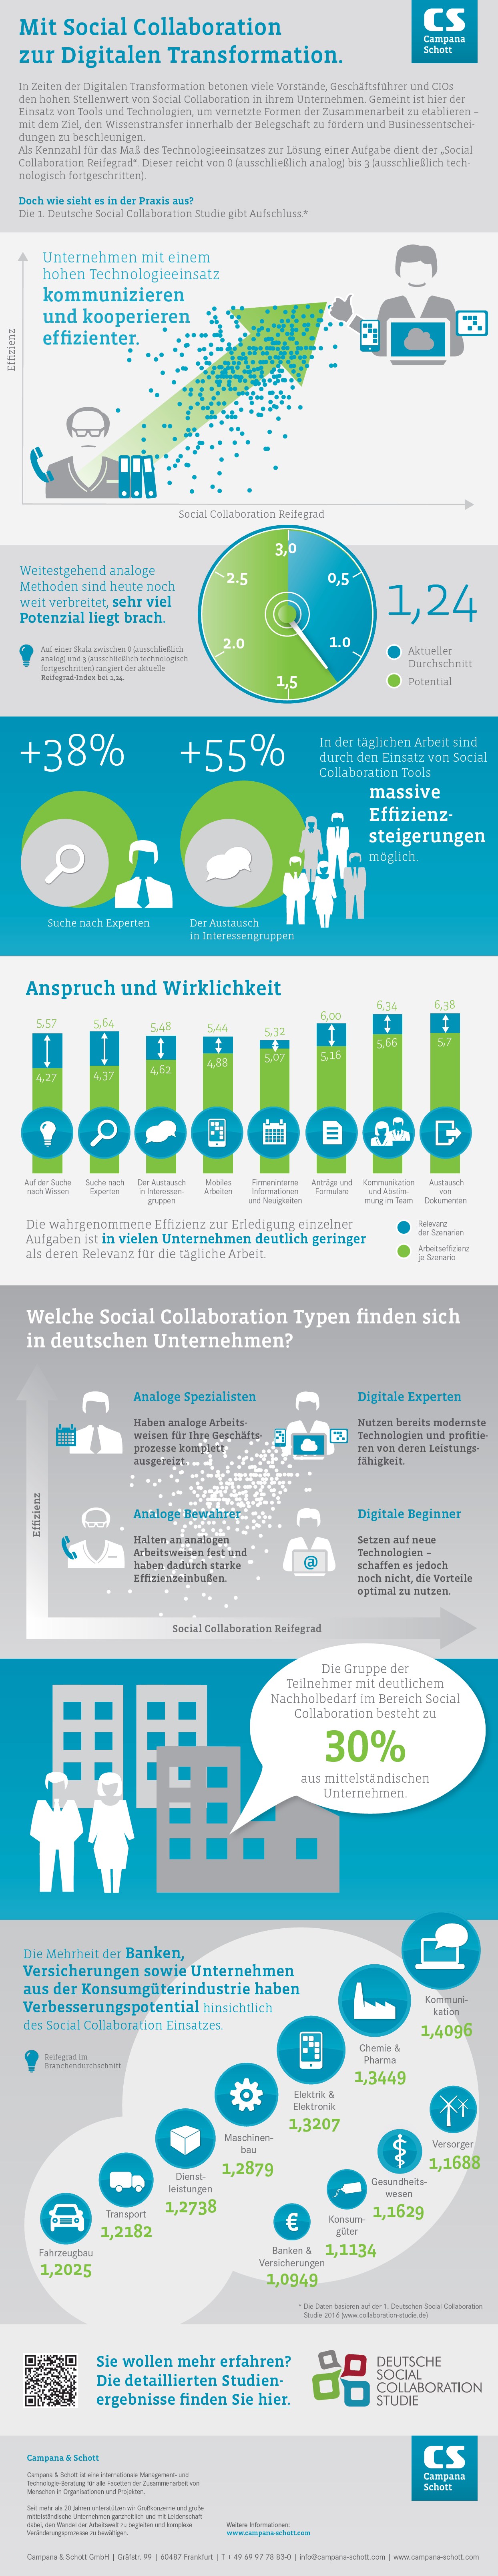 infografik campagna schott social collaboration